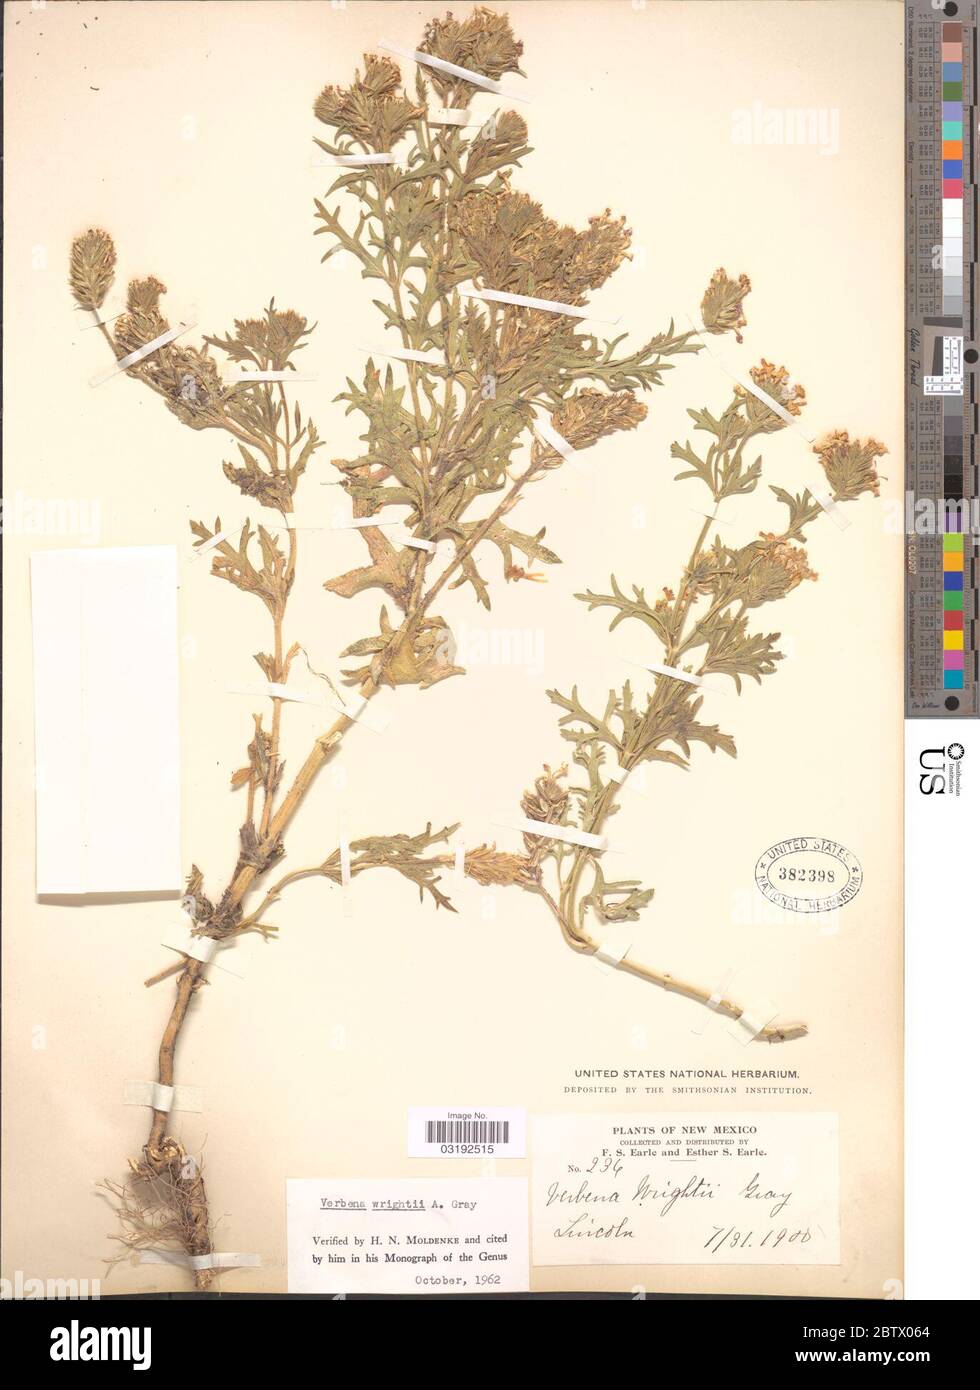 Verbena wrightii A Gray. Stock Photo